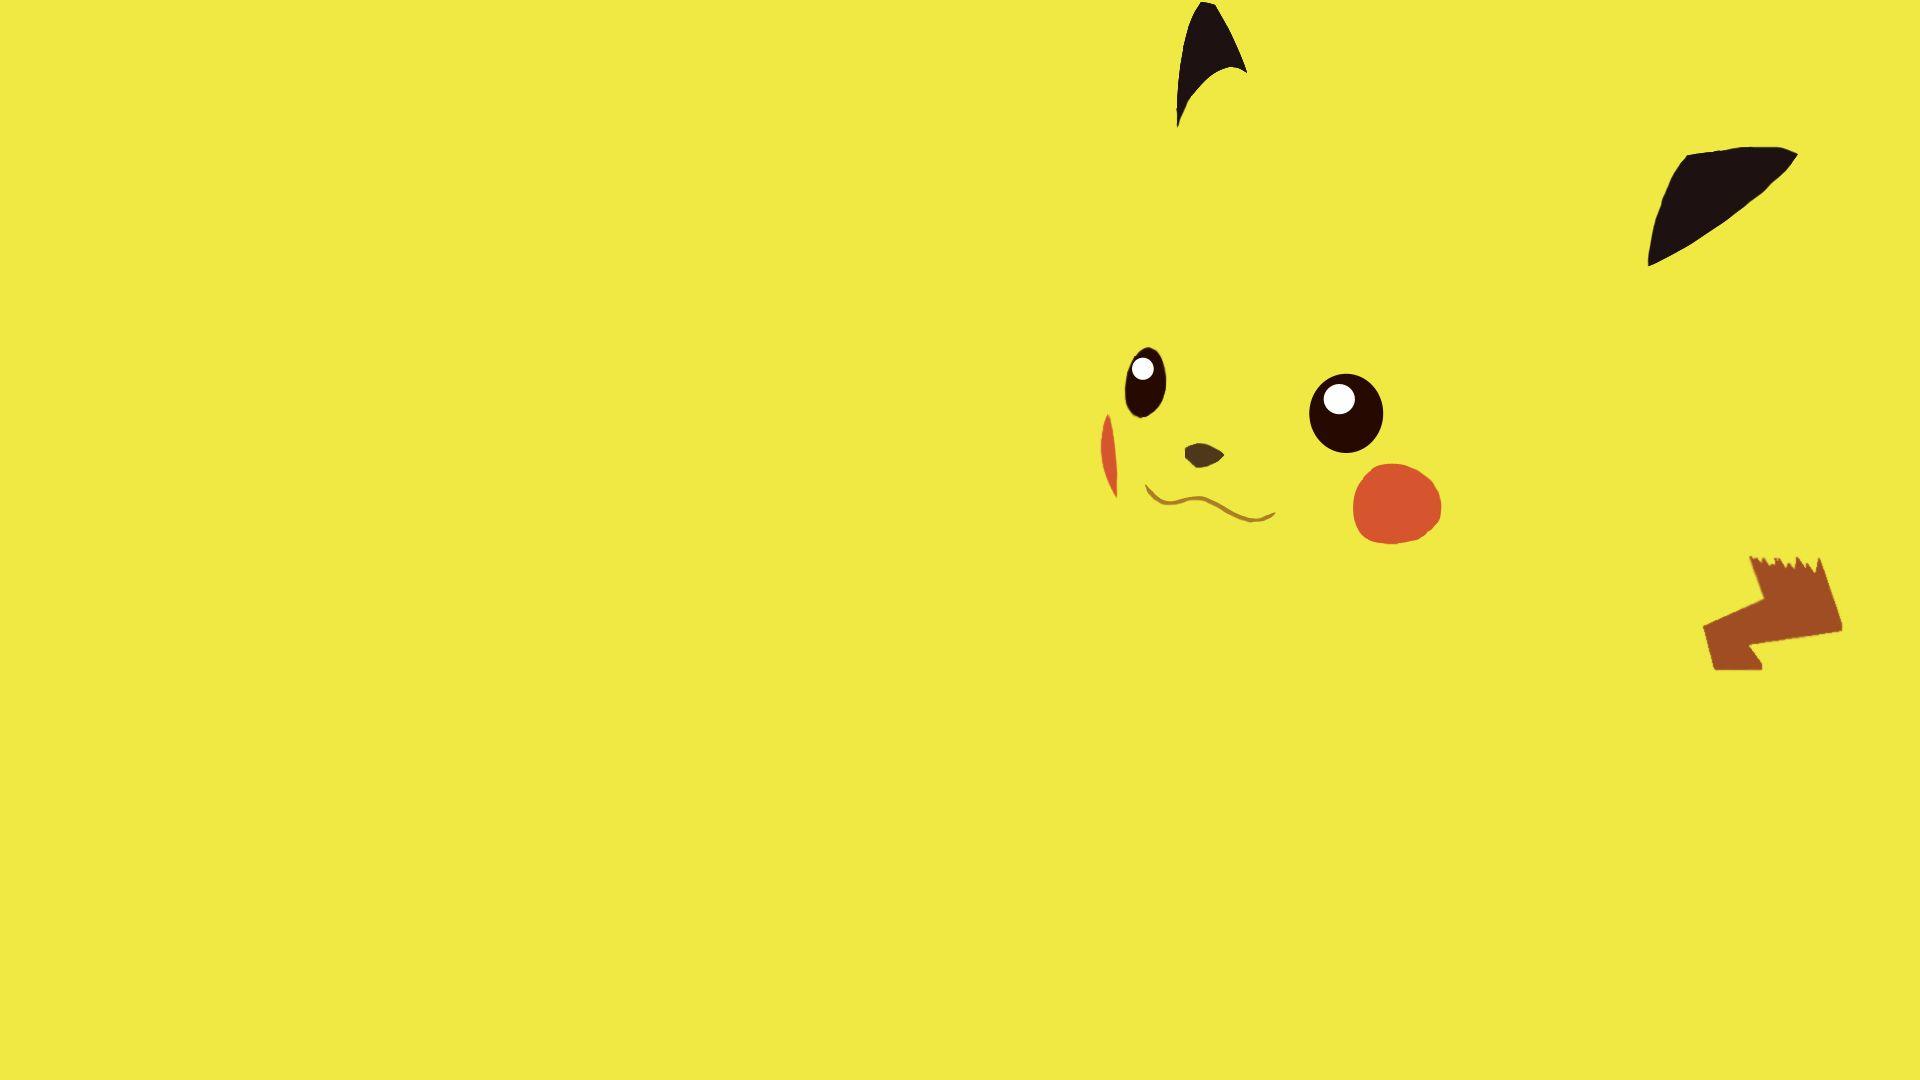 Wallpaper For > Cute Pikachu Wallpaper For iPad